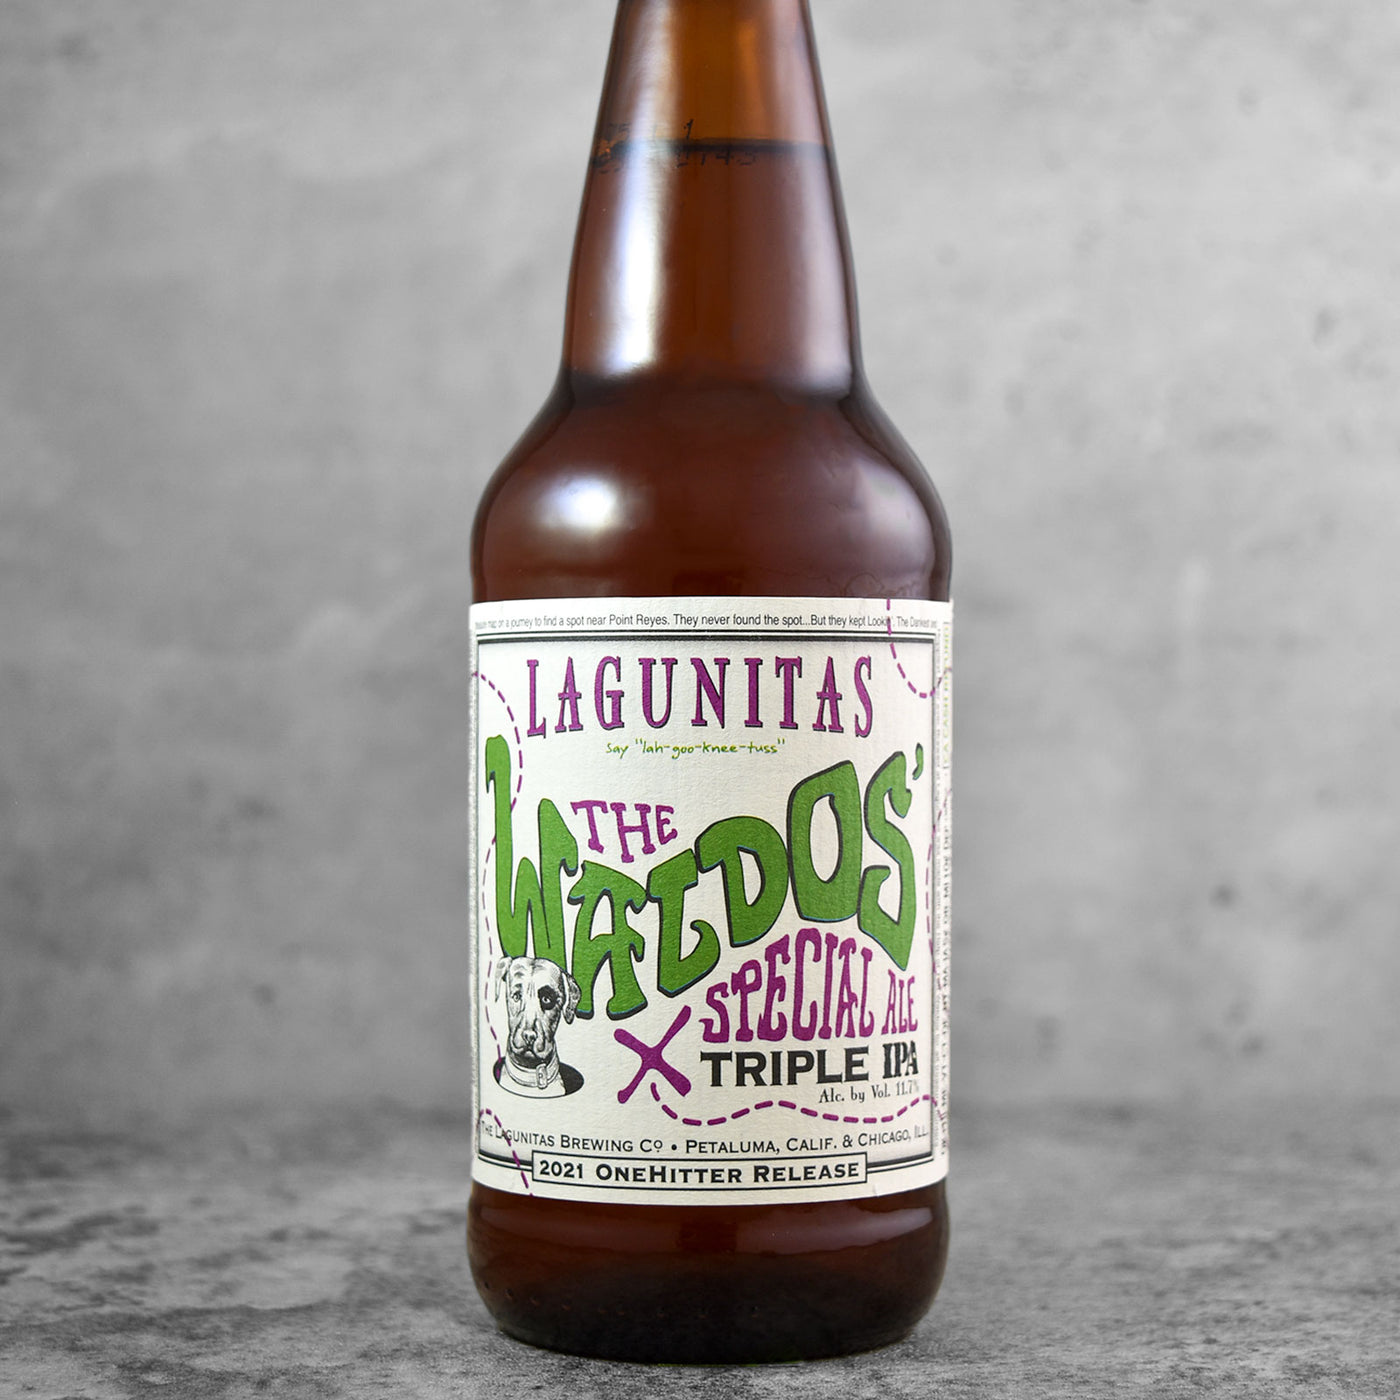 Lagunitas The Waldos' Special Ale